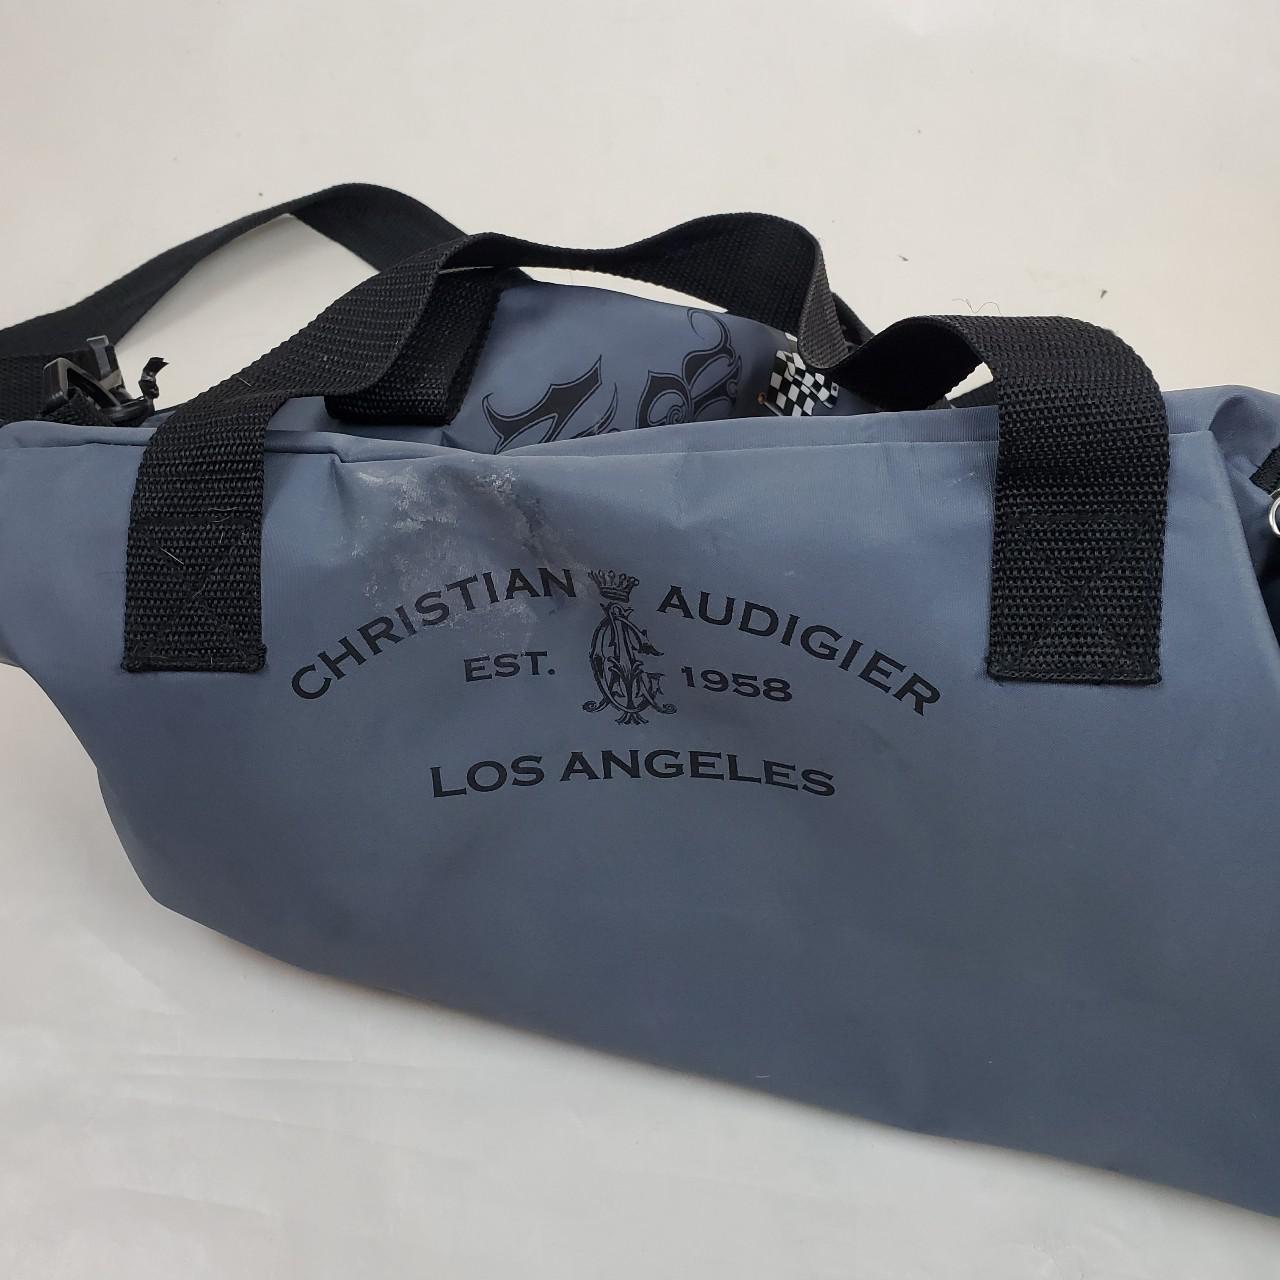 Product Image 2 - Christian audigler duffle bag. 

♡